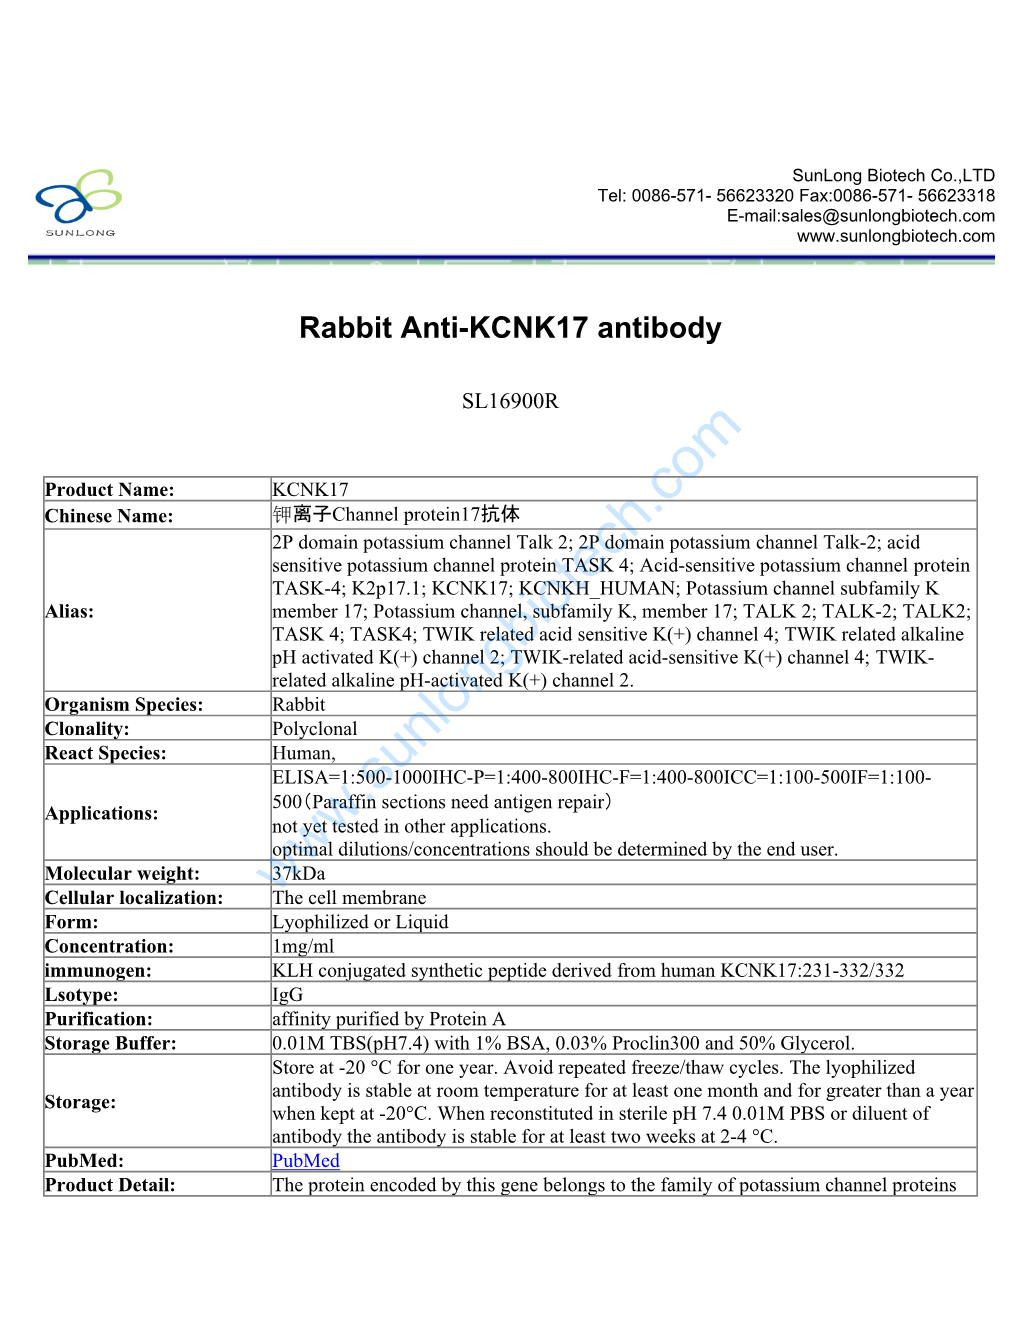 Rabbit Anti-KCNK17 Antibody-SL16900R